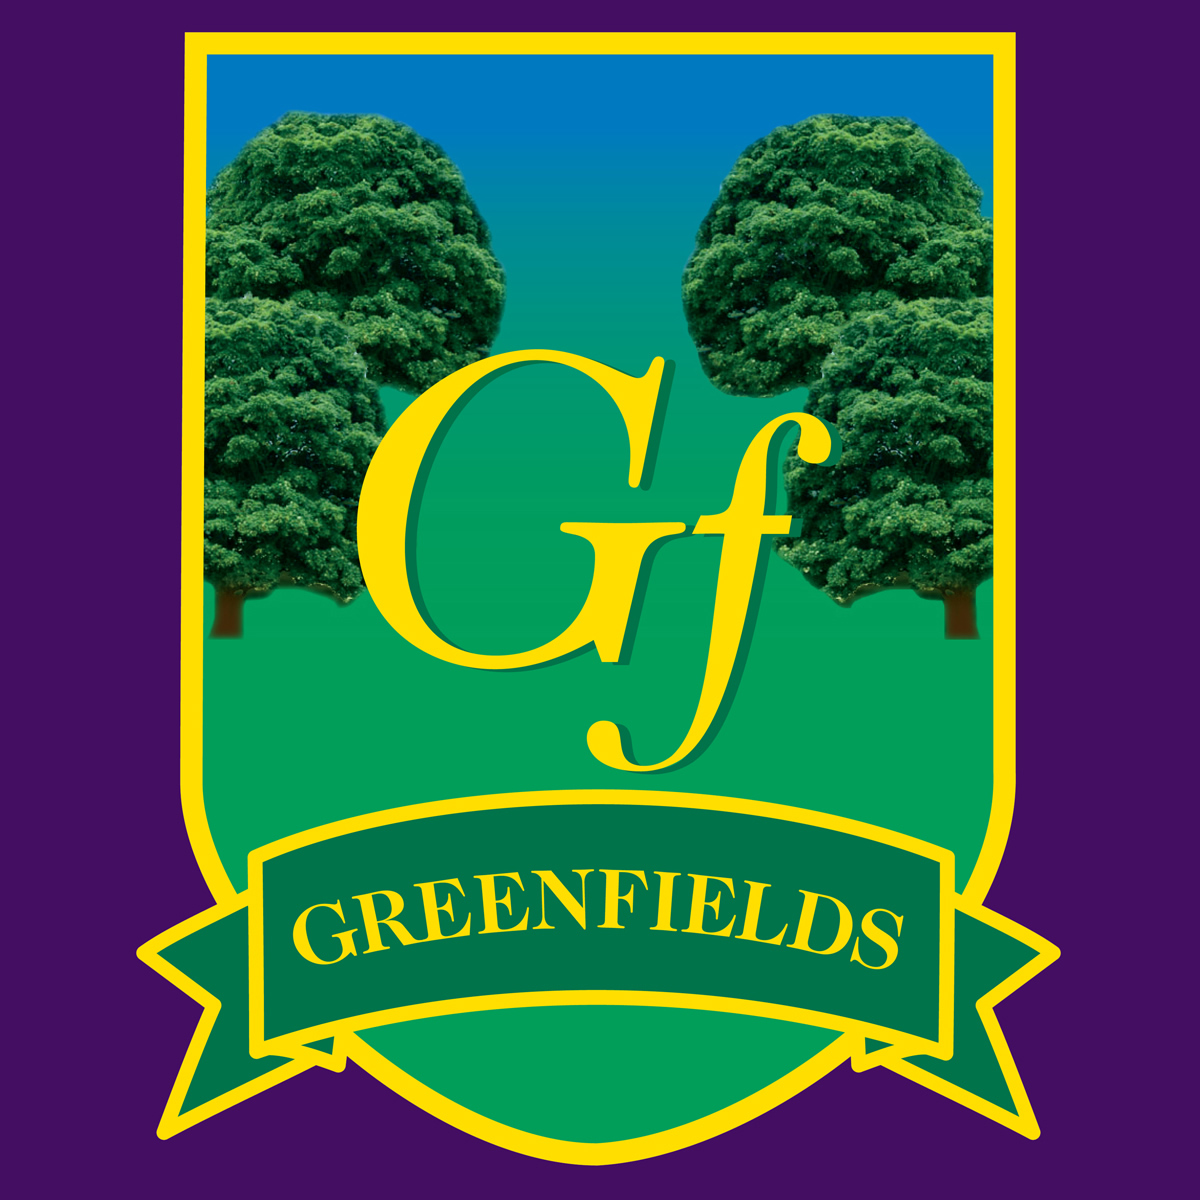 Greenfields School emblem